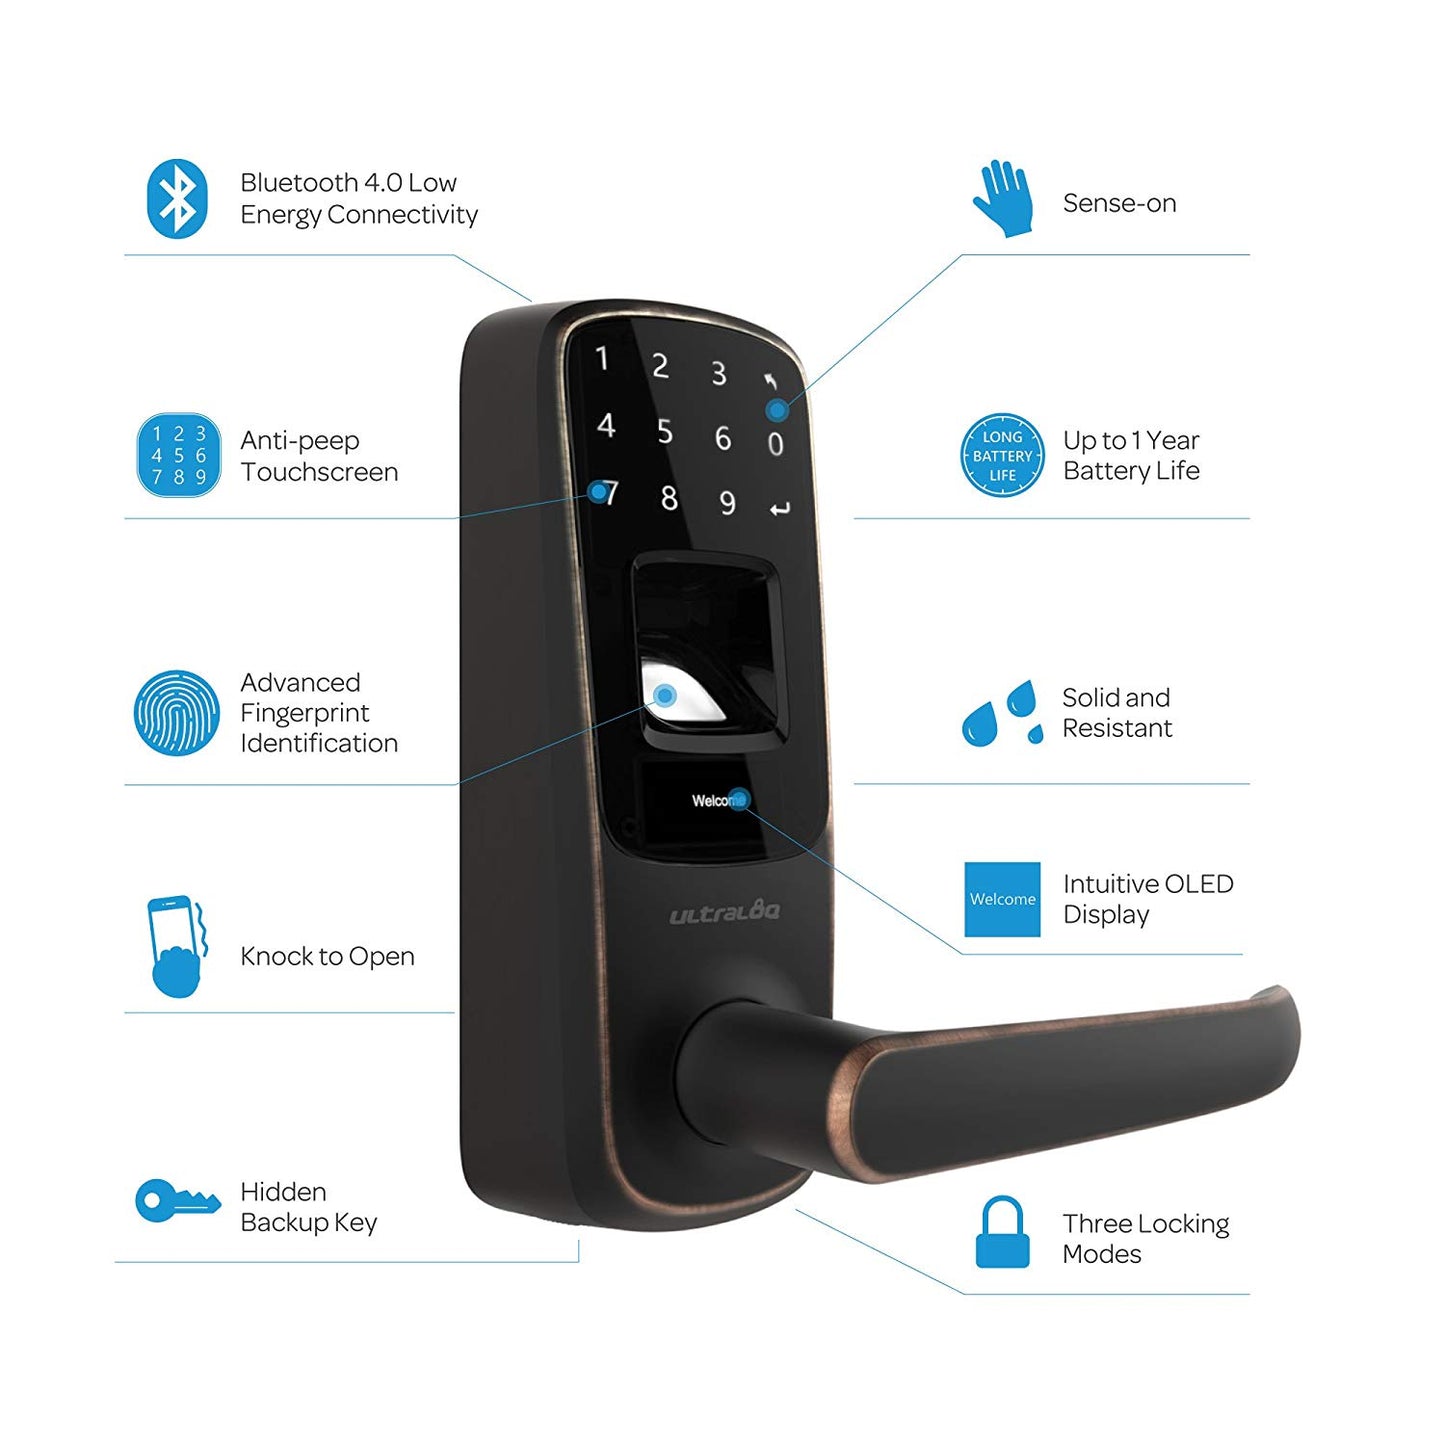 Ultraloq UL3 BT Bluetooth Enabled Fingerprint and Touchscreen Keyless Smart Lock (Satin Nickel)